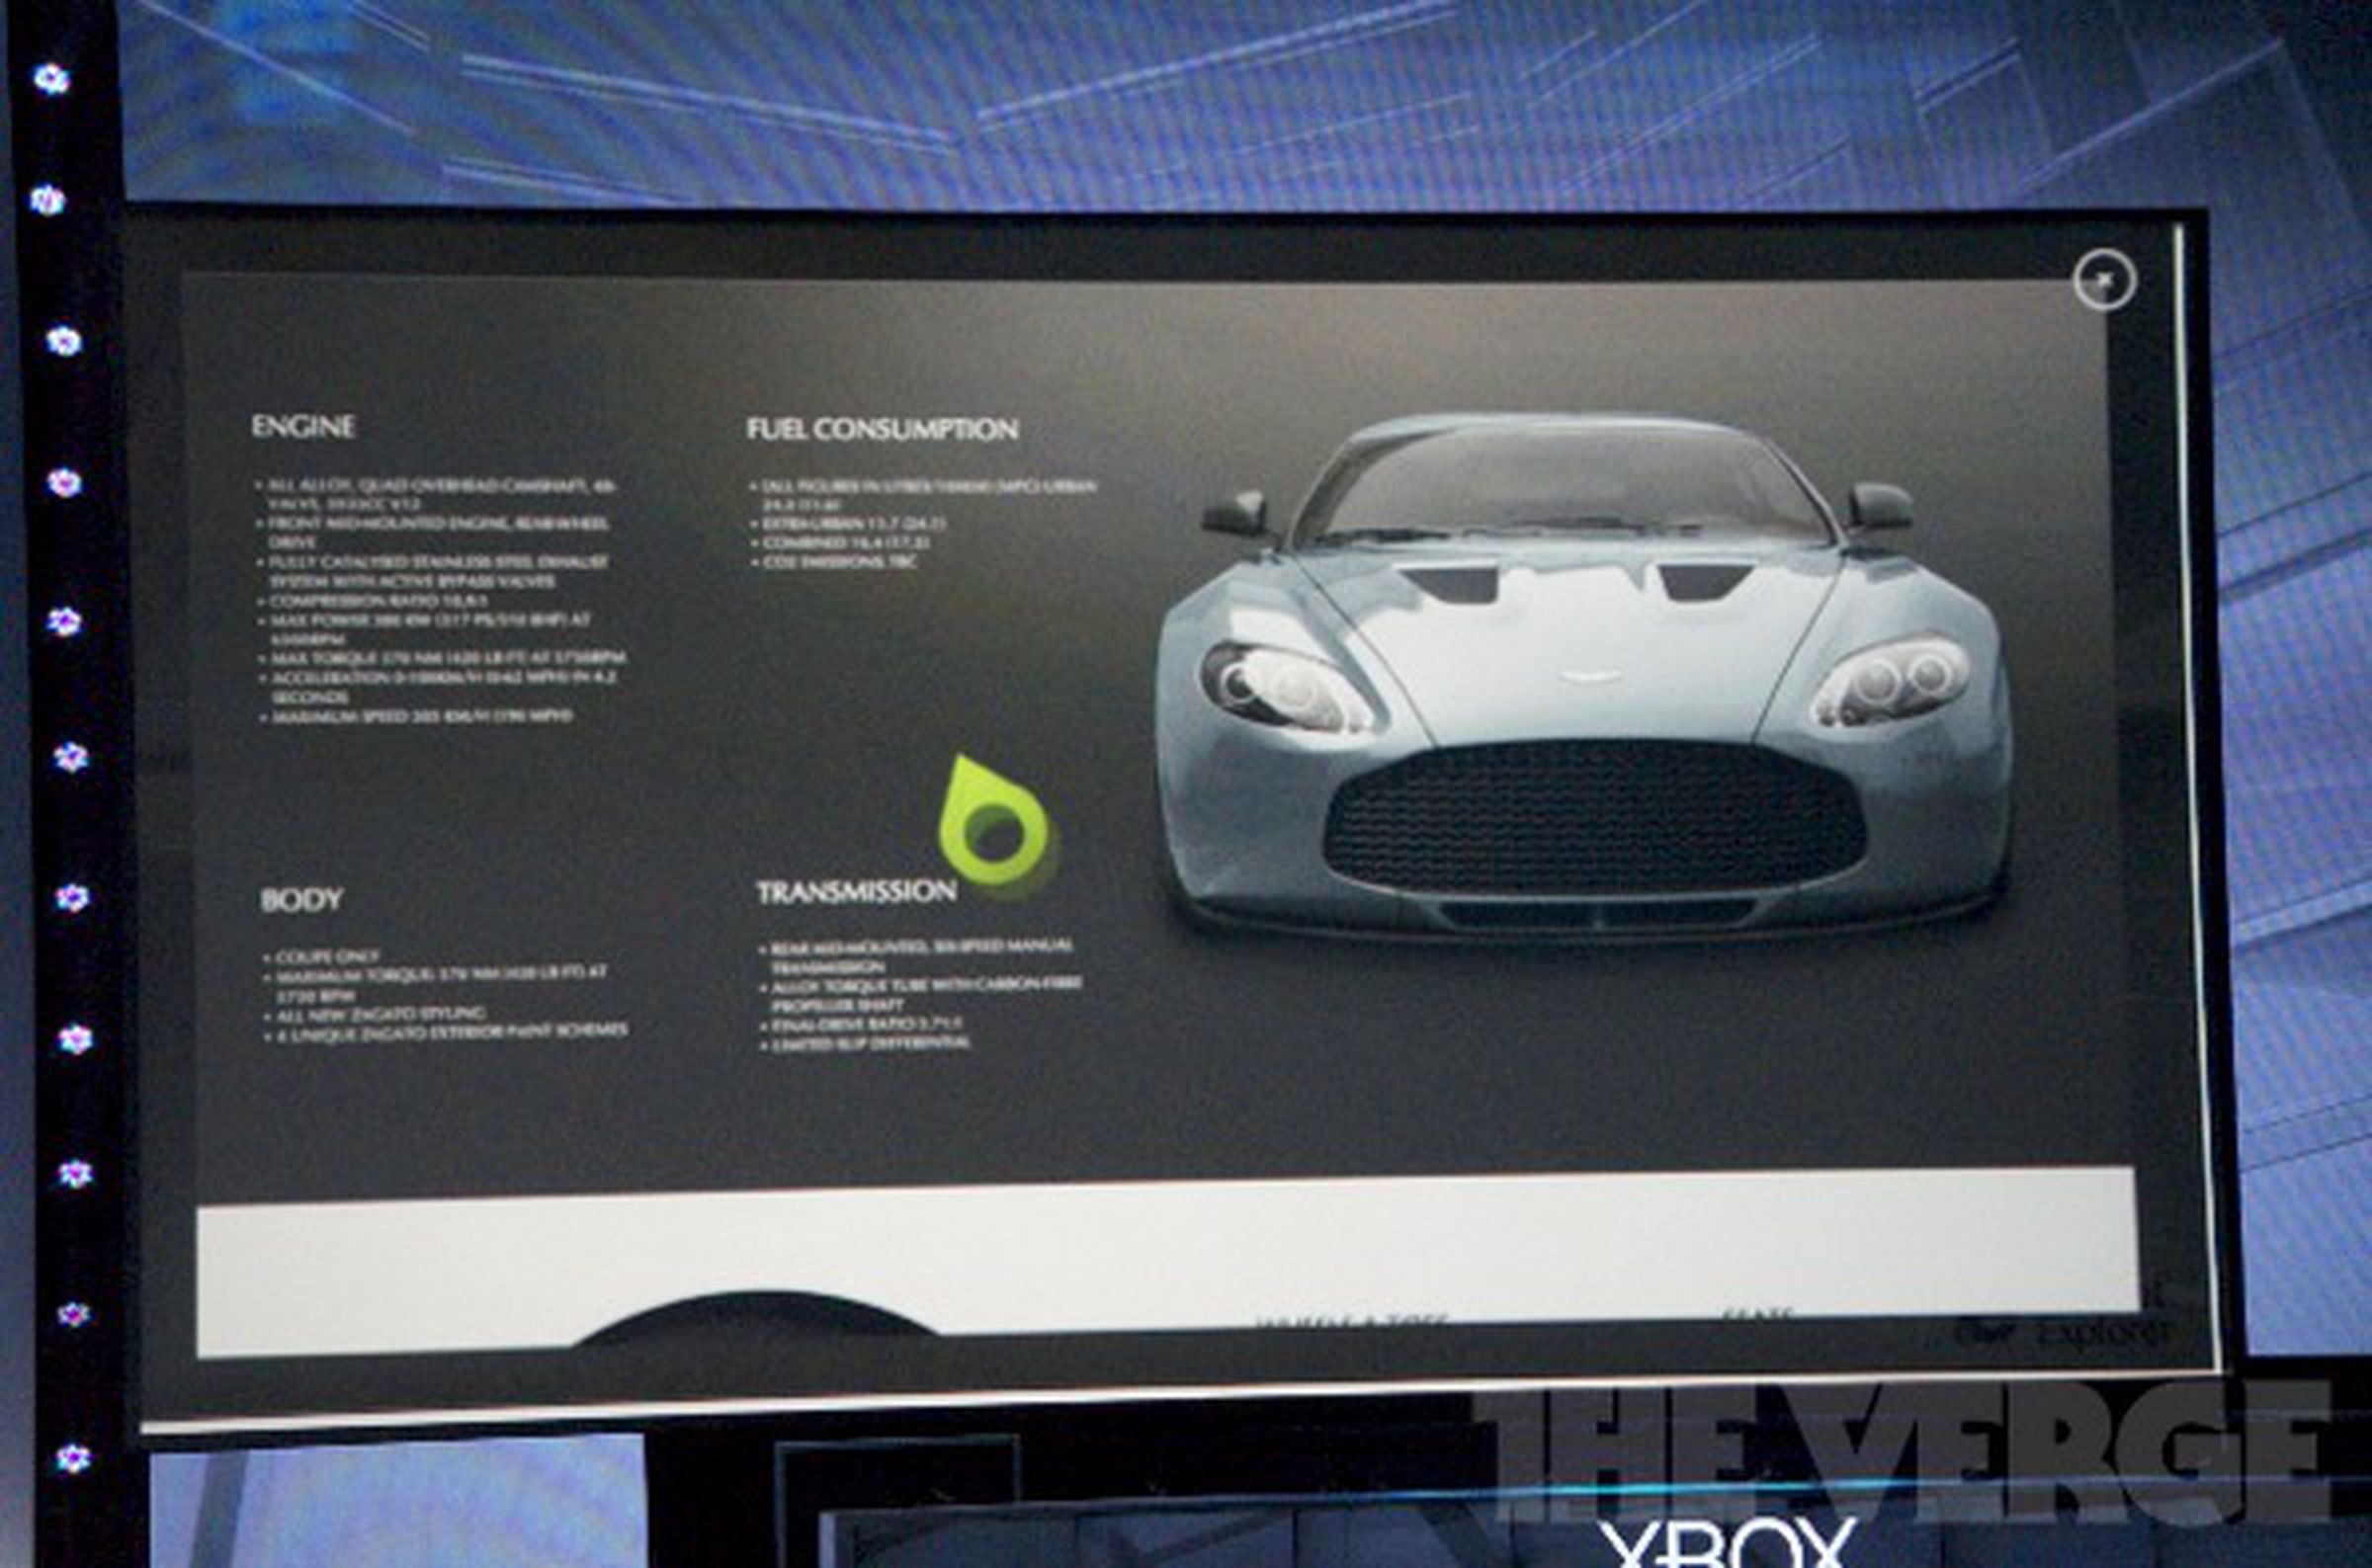 Internet Explorer for Xbox E3 2012 press conference photos